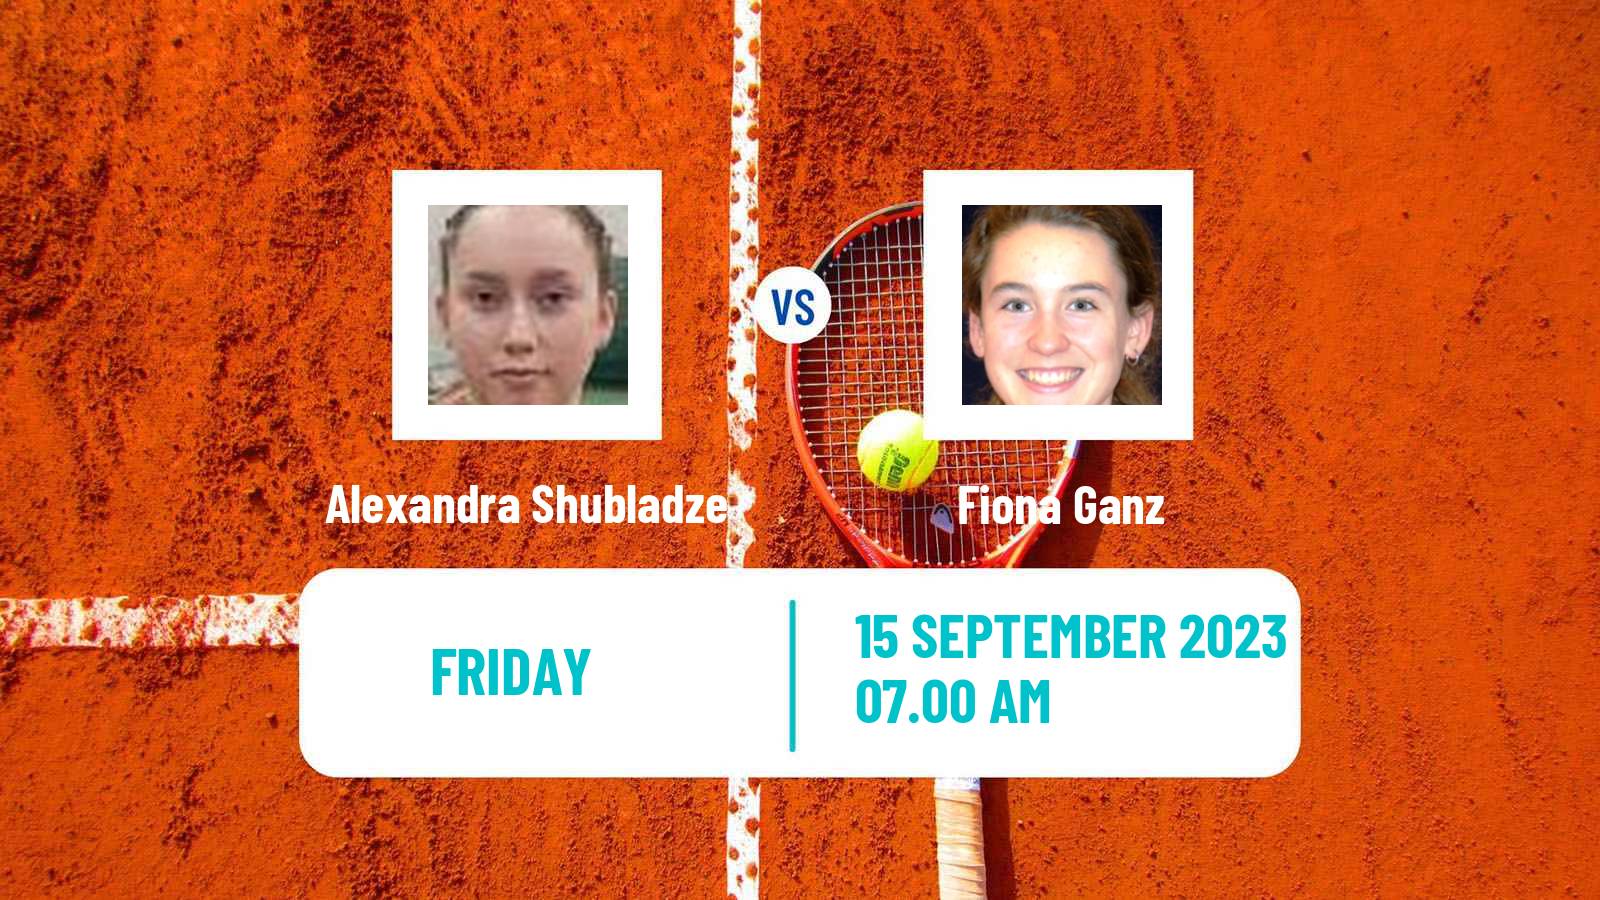 Tennis ITF W15 Dijon Women Alexandra Shubladze - Fiona Ganz